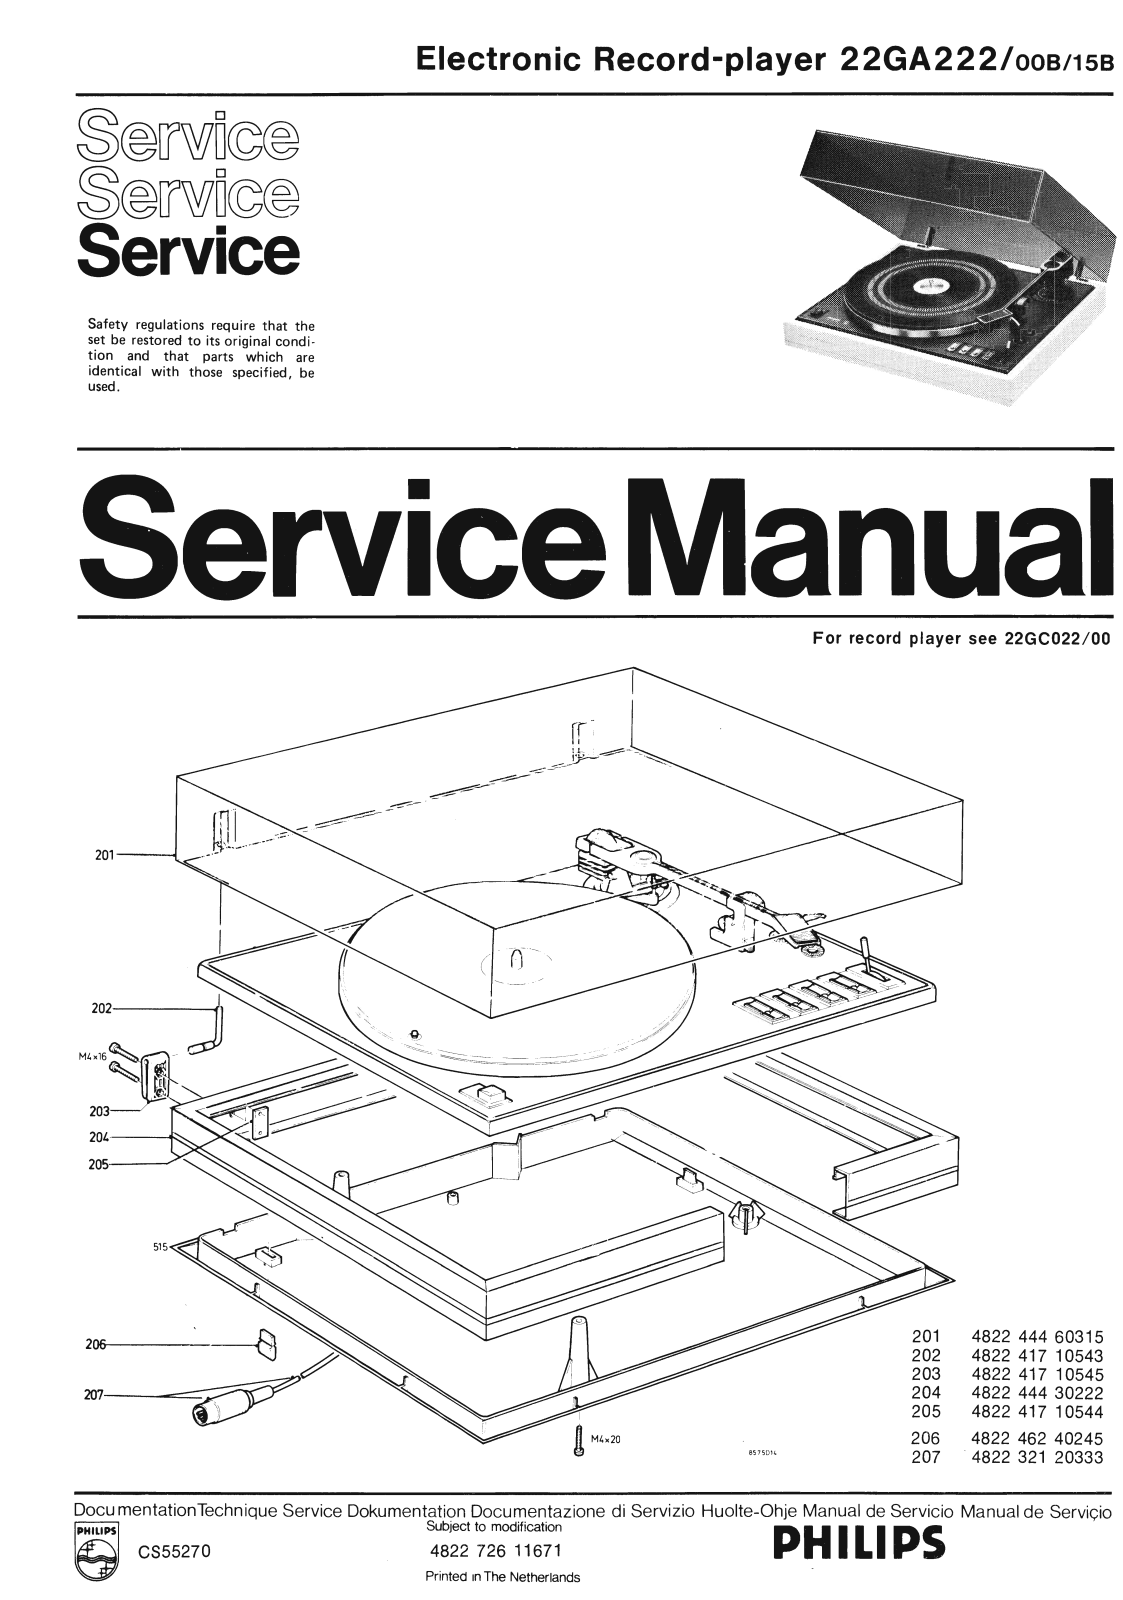 Philips 22-GA-222 Service Manual